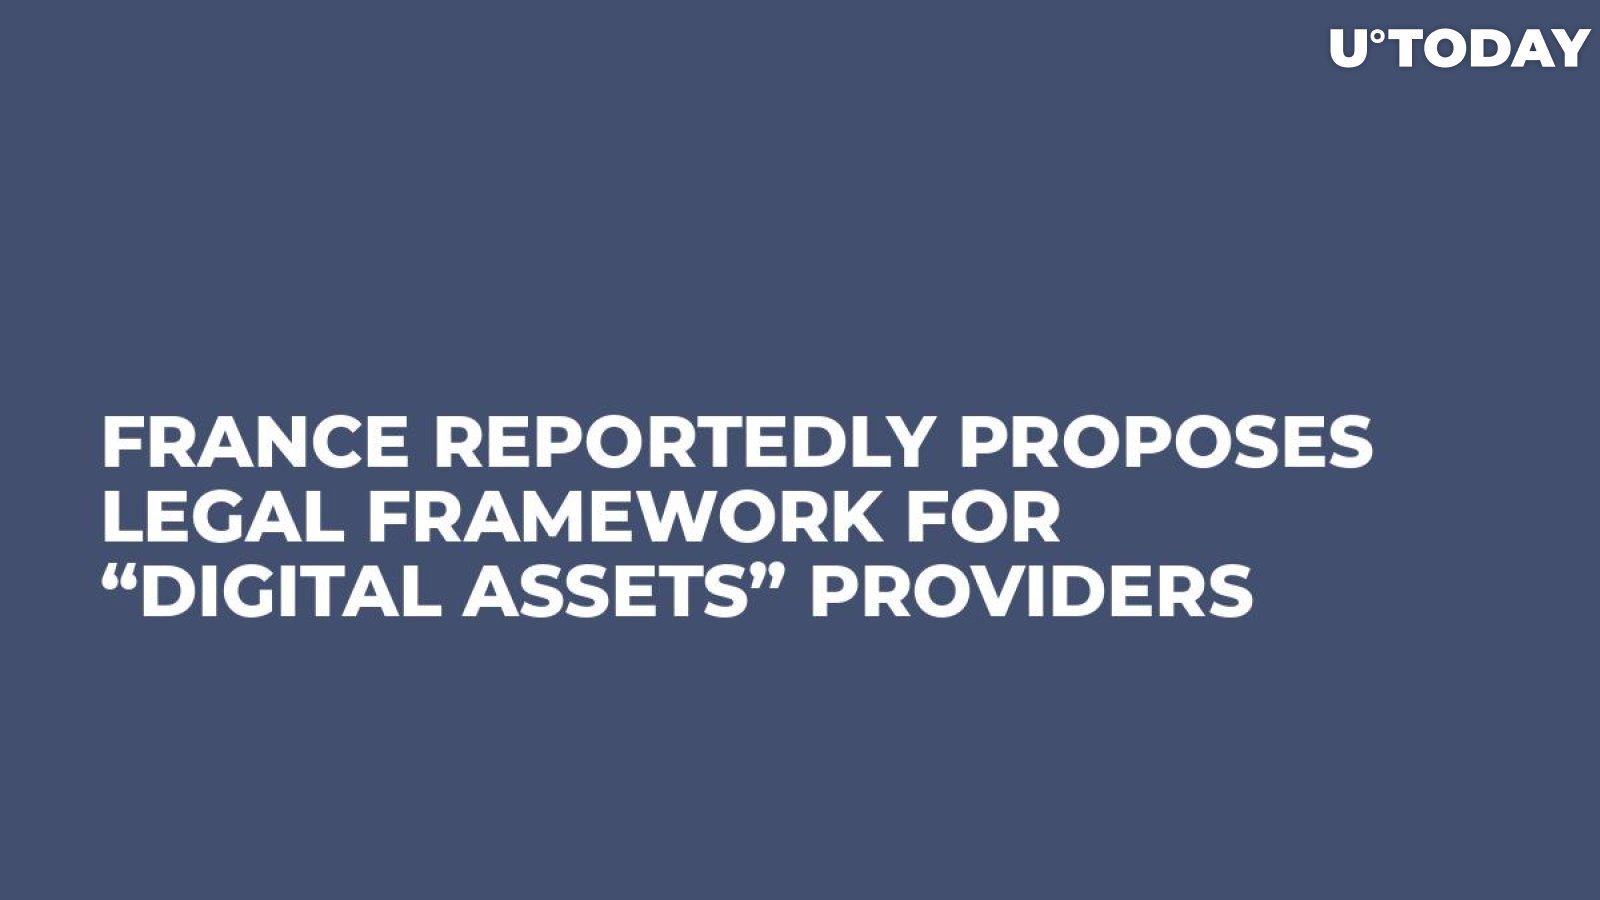 France Reportedly Proposes Legal Framework For “Digital Assets” Providers